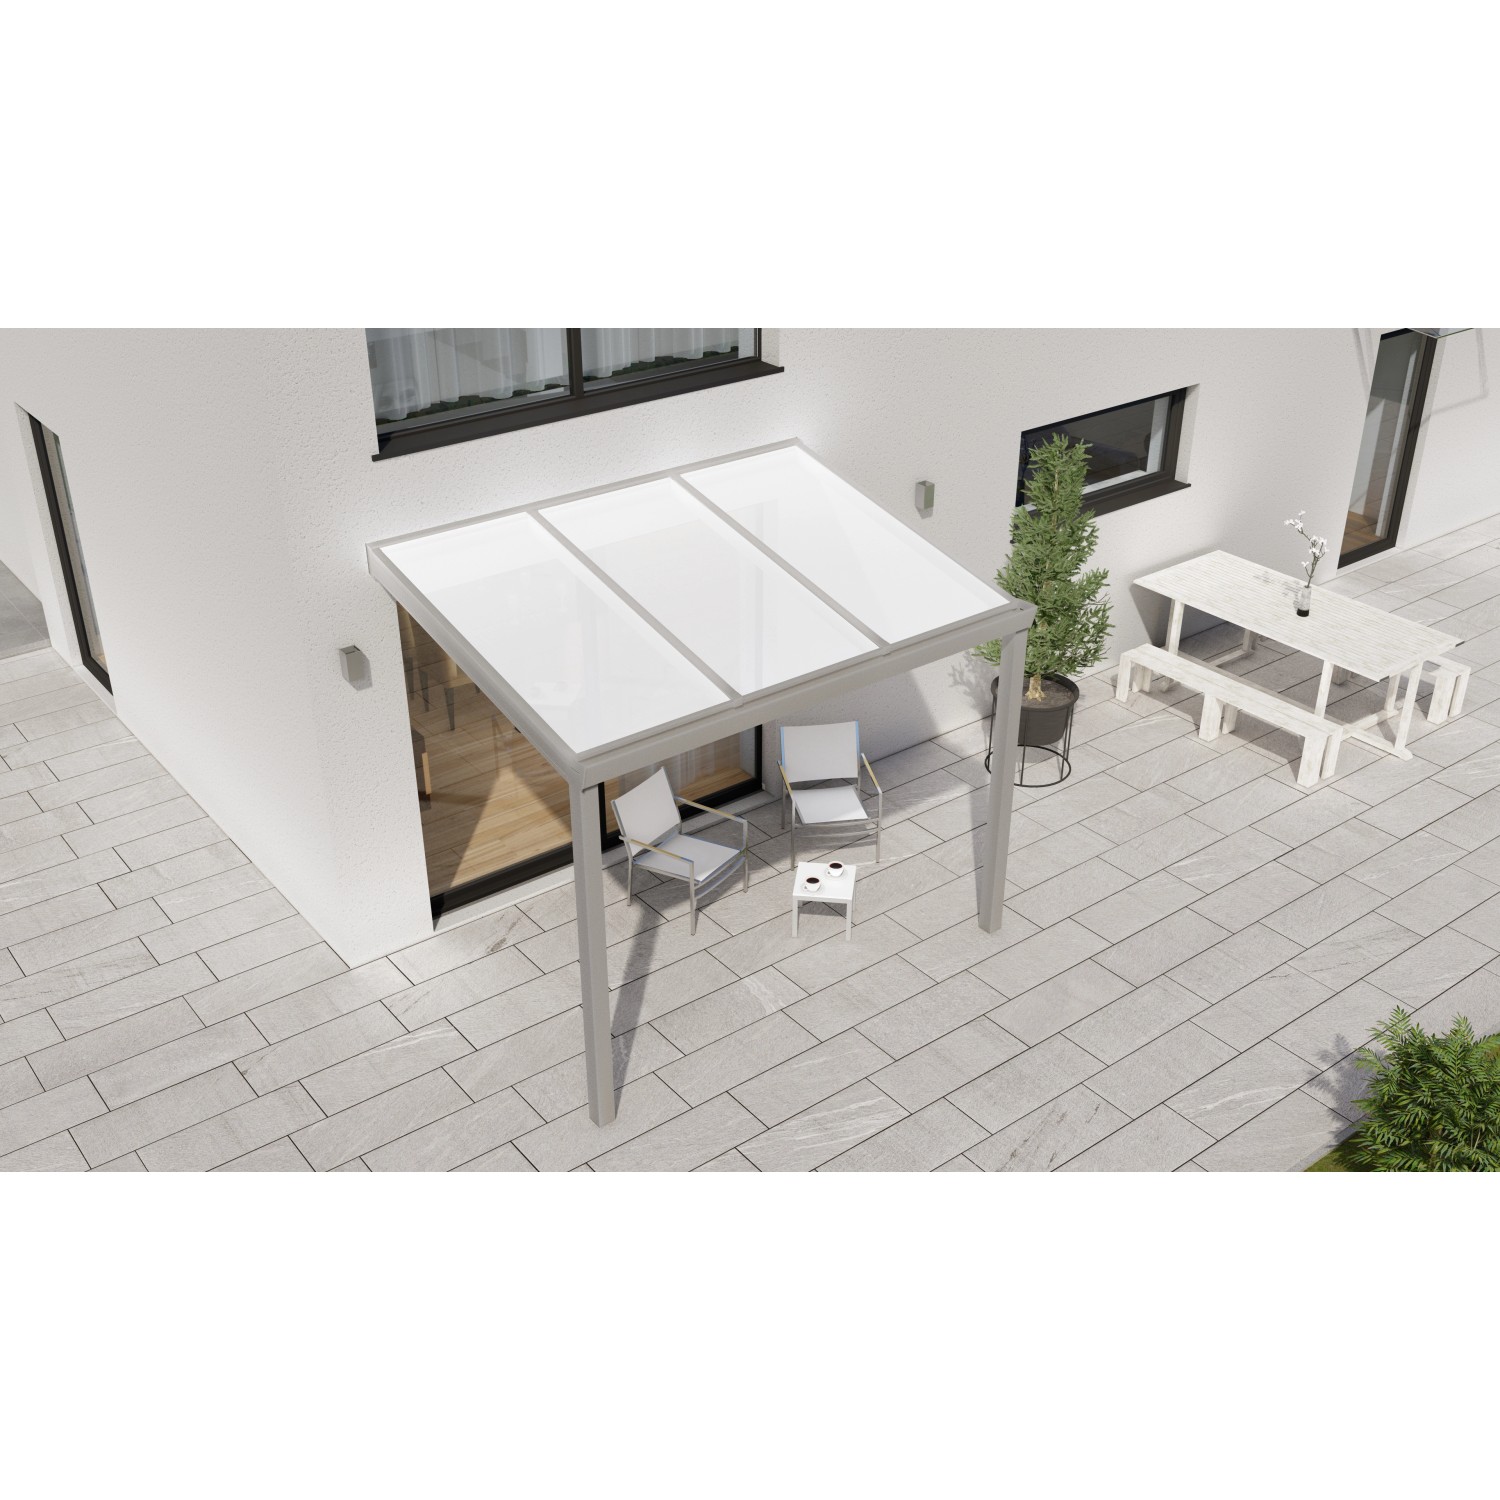 Terrassenüberdachung Professional 300 cm x 250 cm Grau Struktur PC Opal von GARDENDREAMS